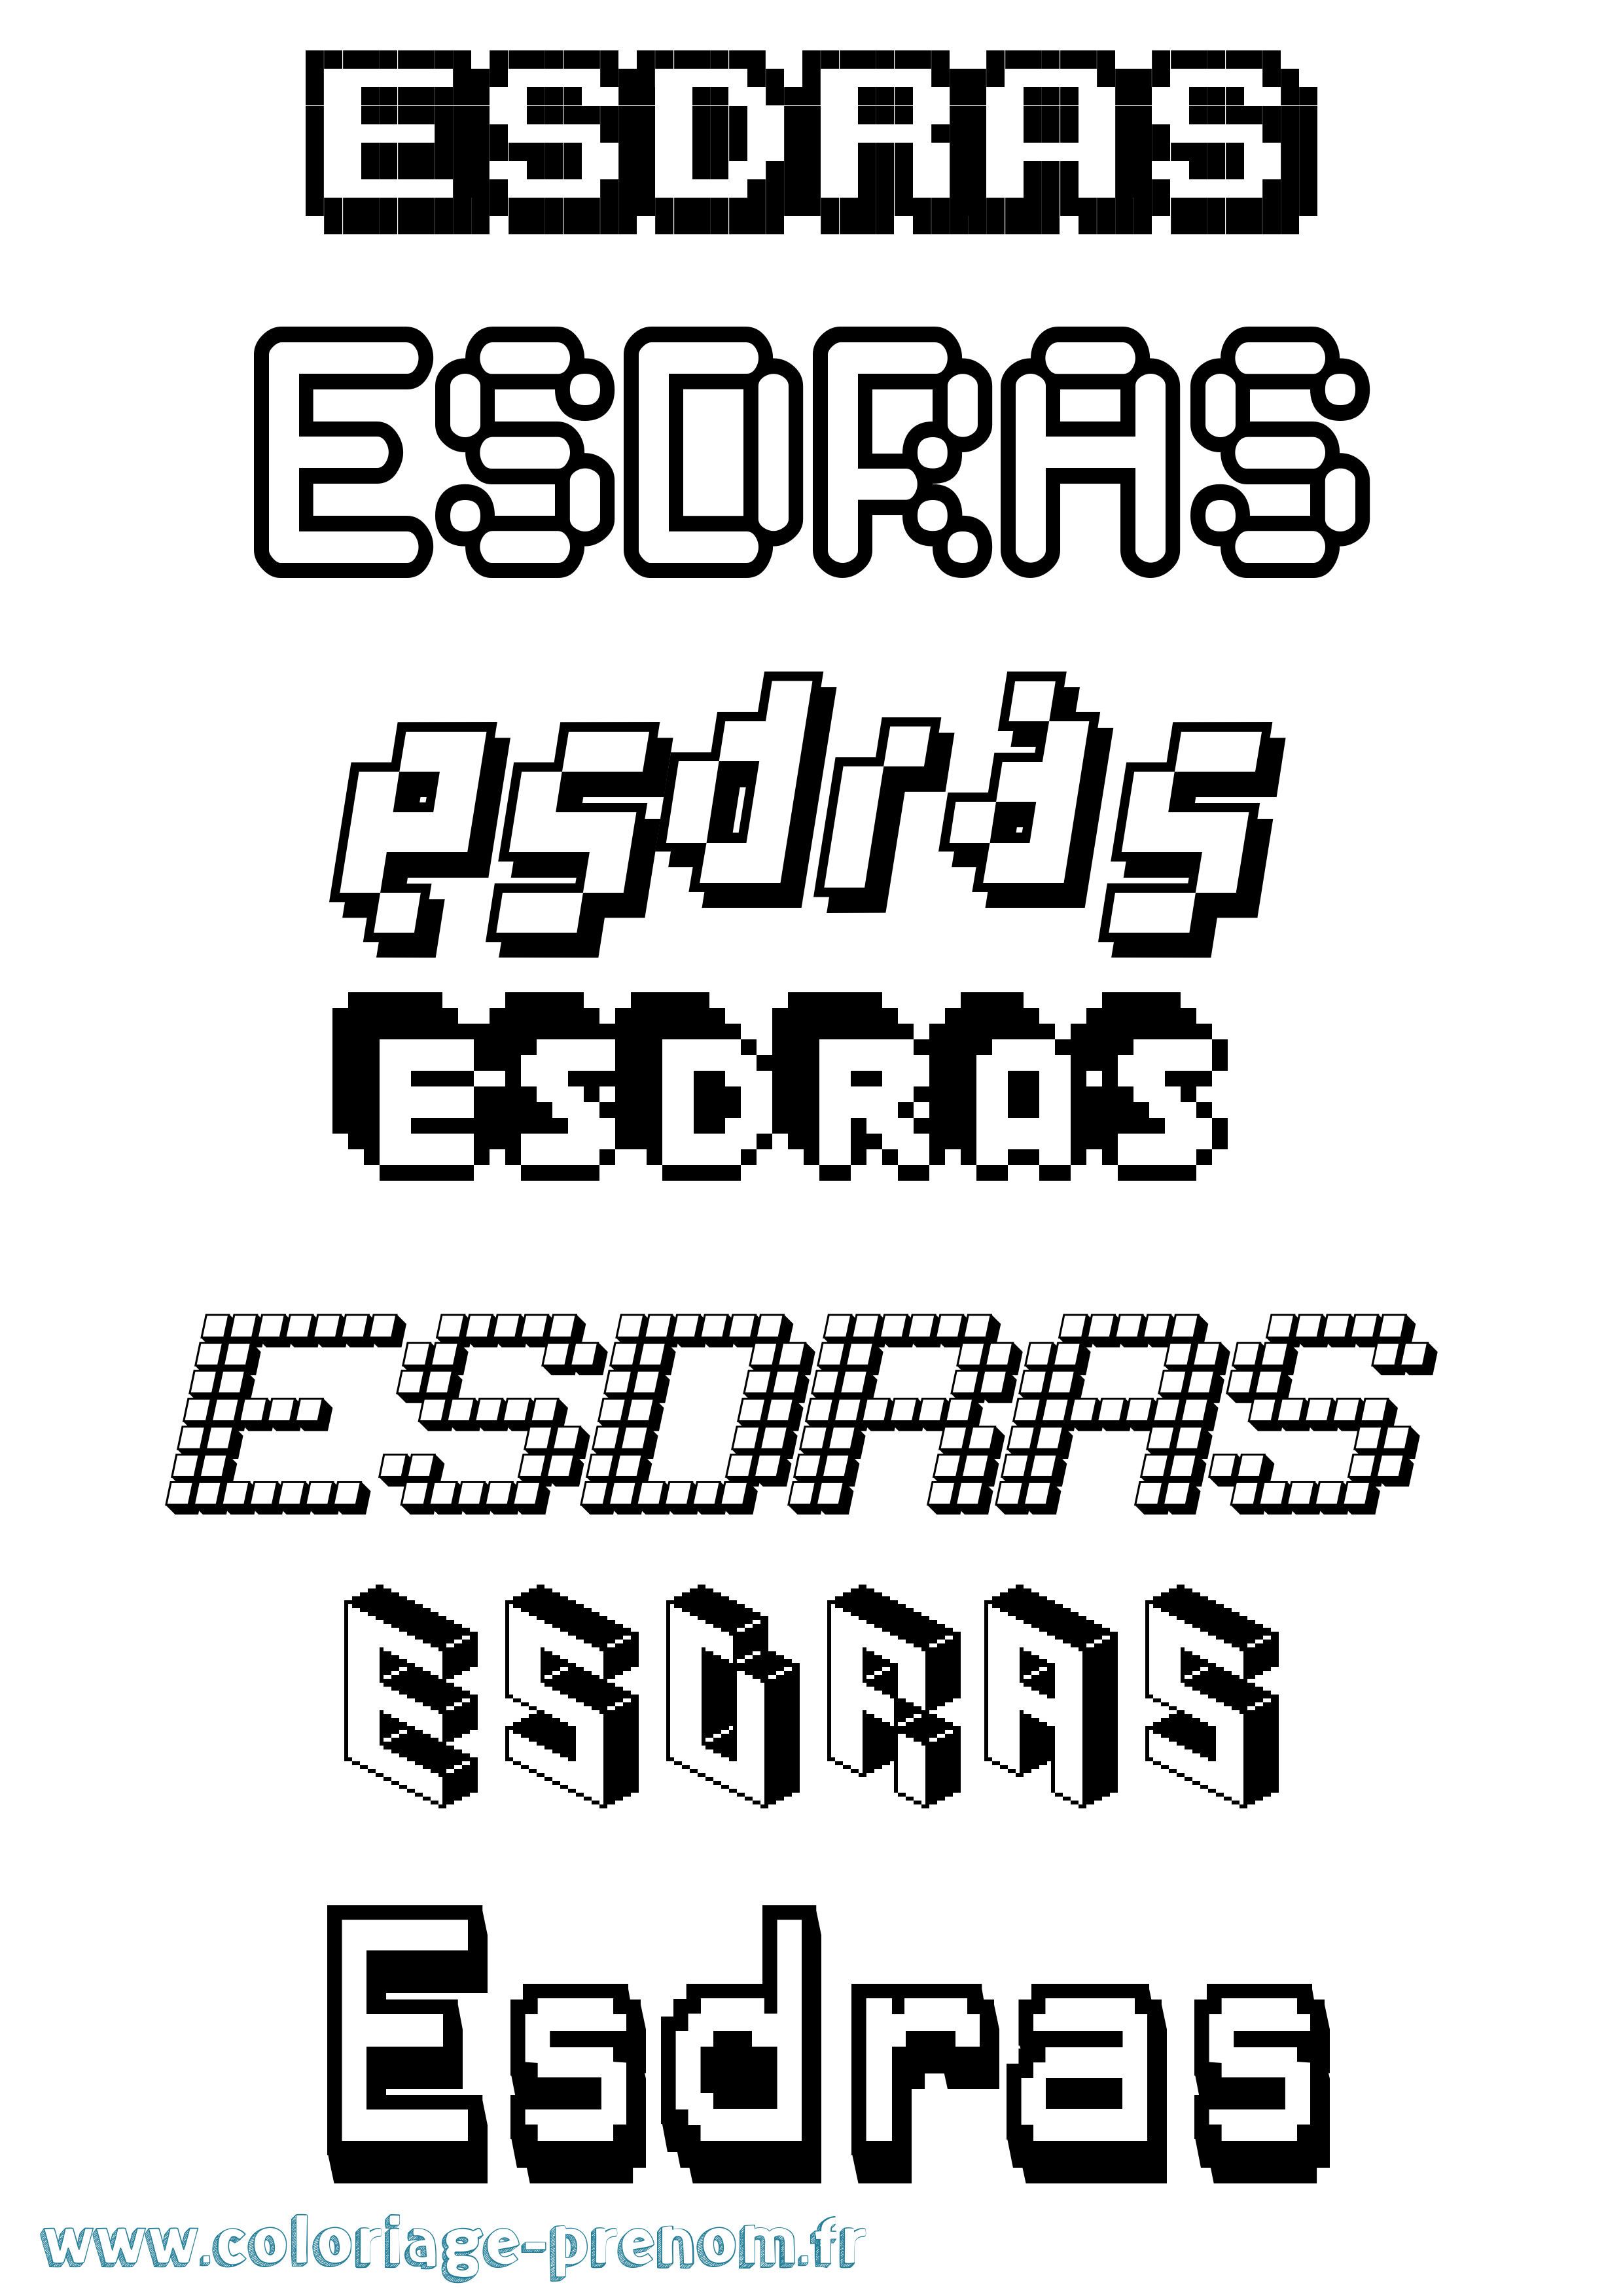 Coloriage prénom Esdras Pixel